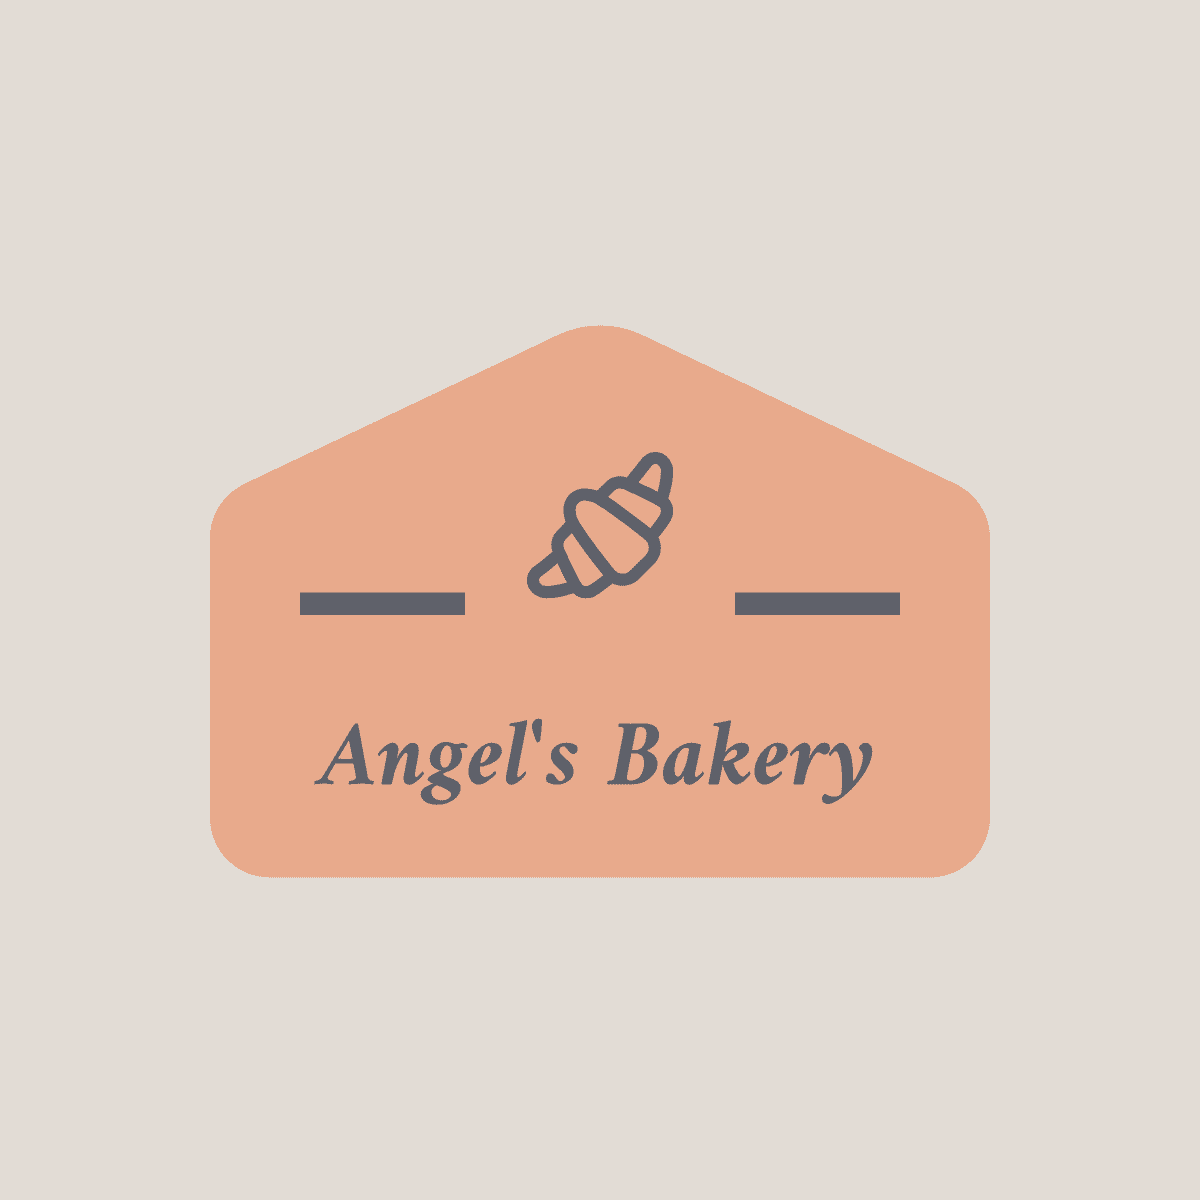 Angel's Bakery